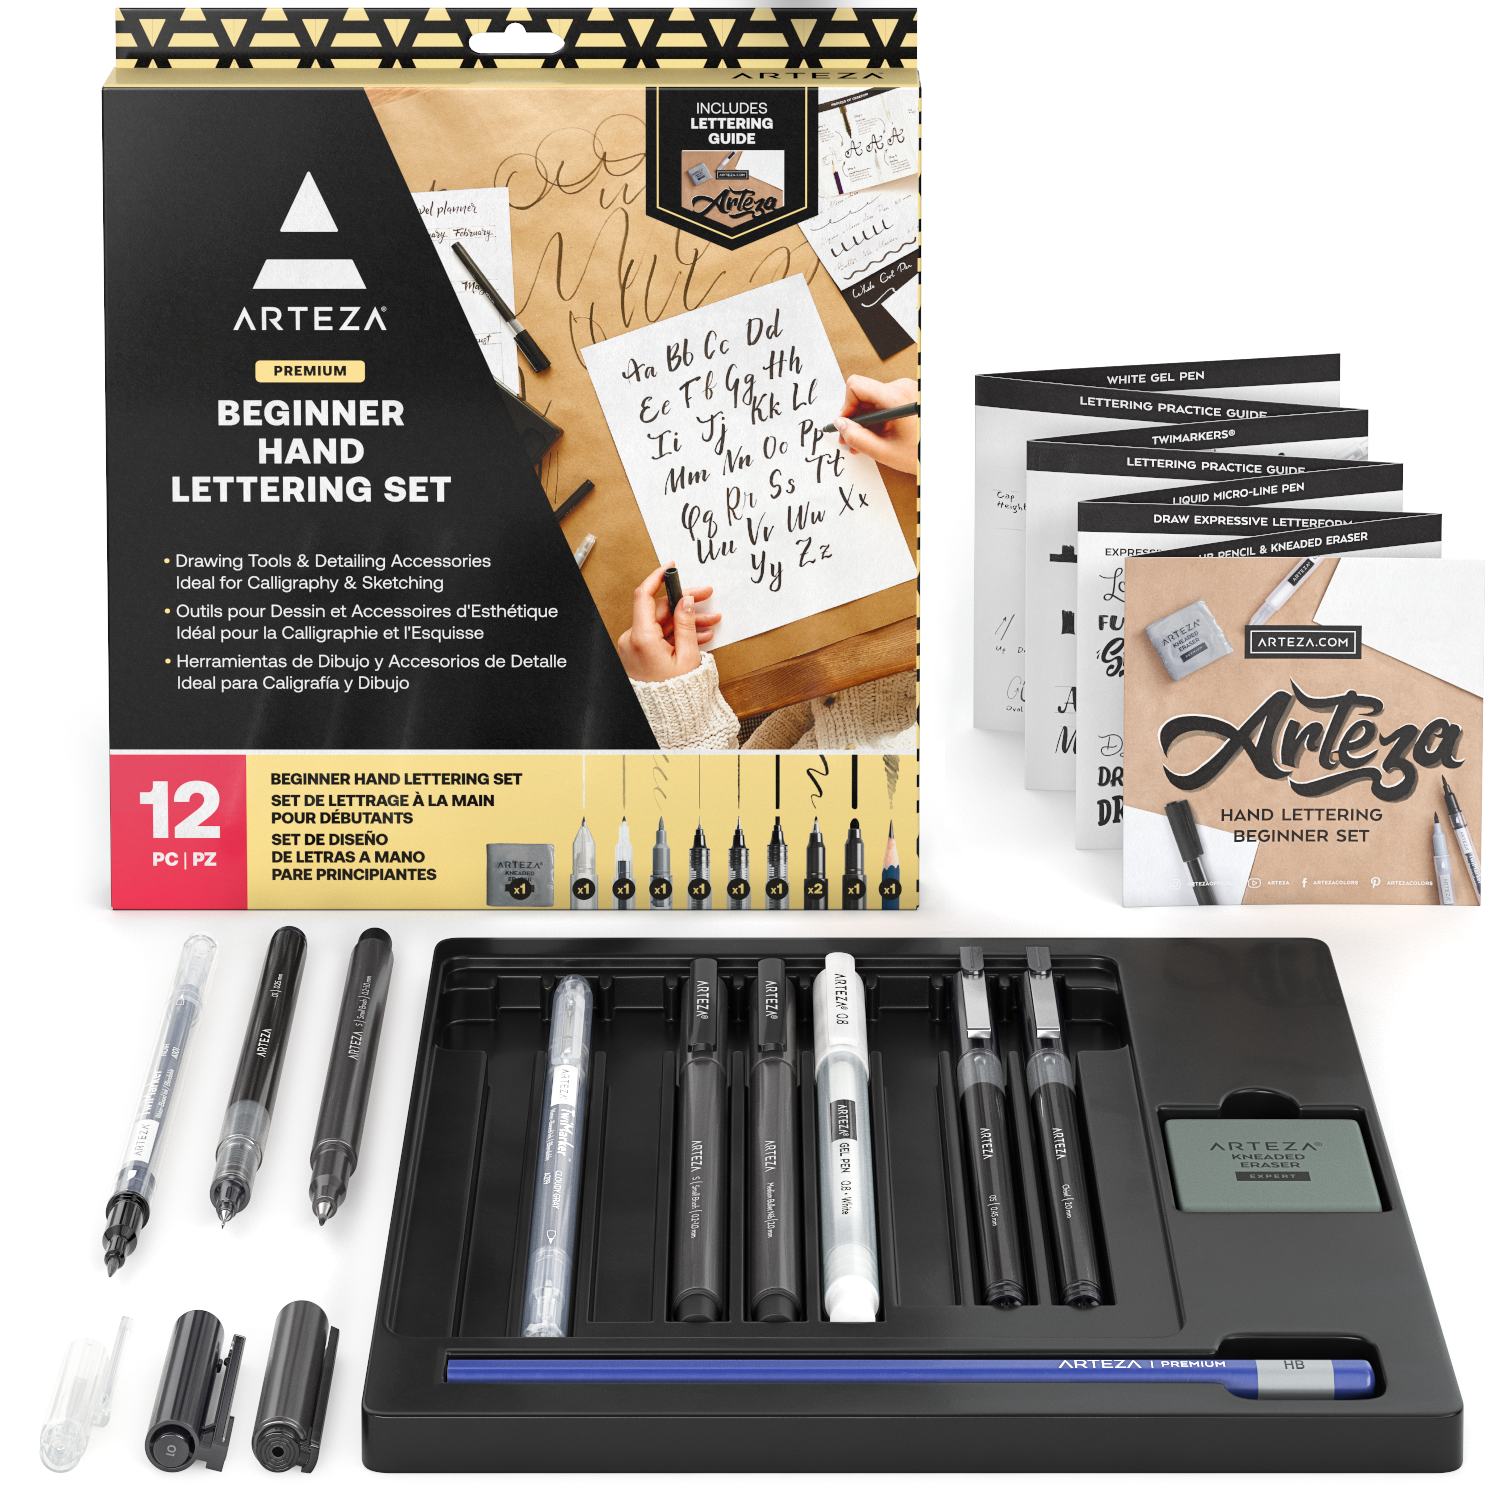 Arteza Calligraphy Pens & Beginner Hand Lettering Set - 12 Piece Set